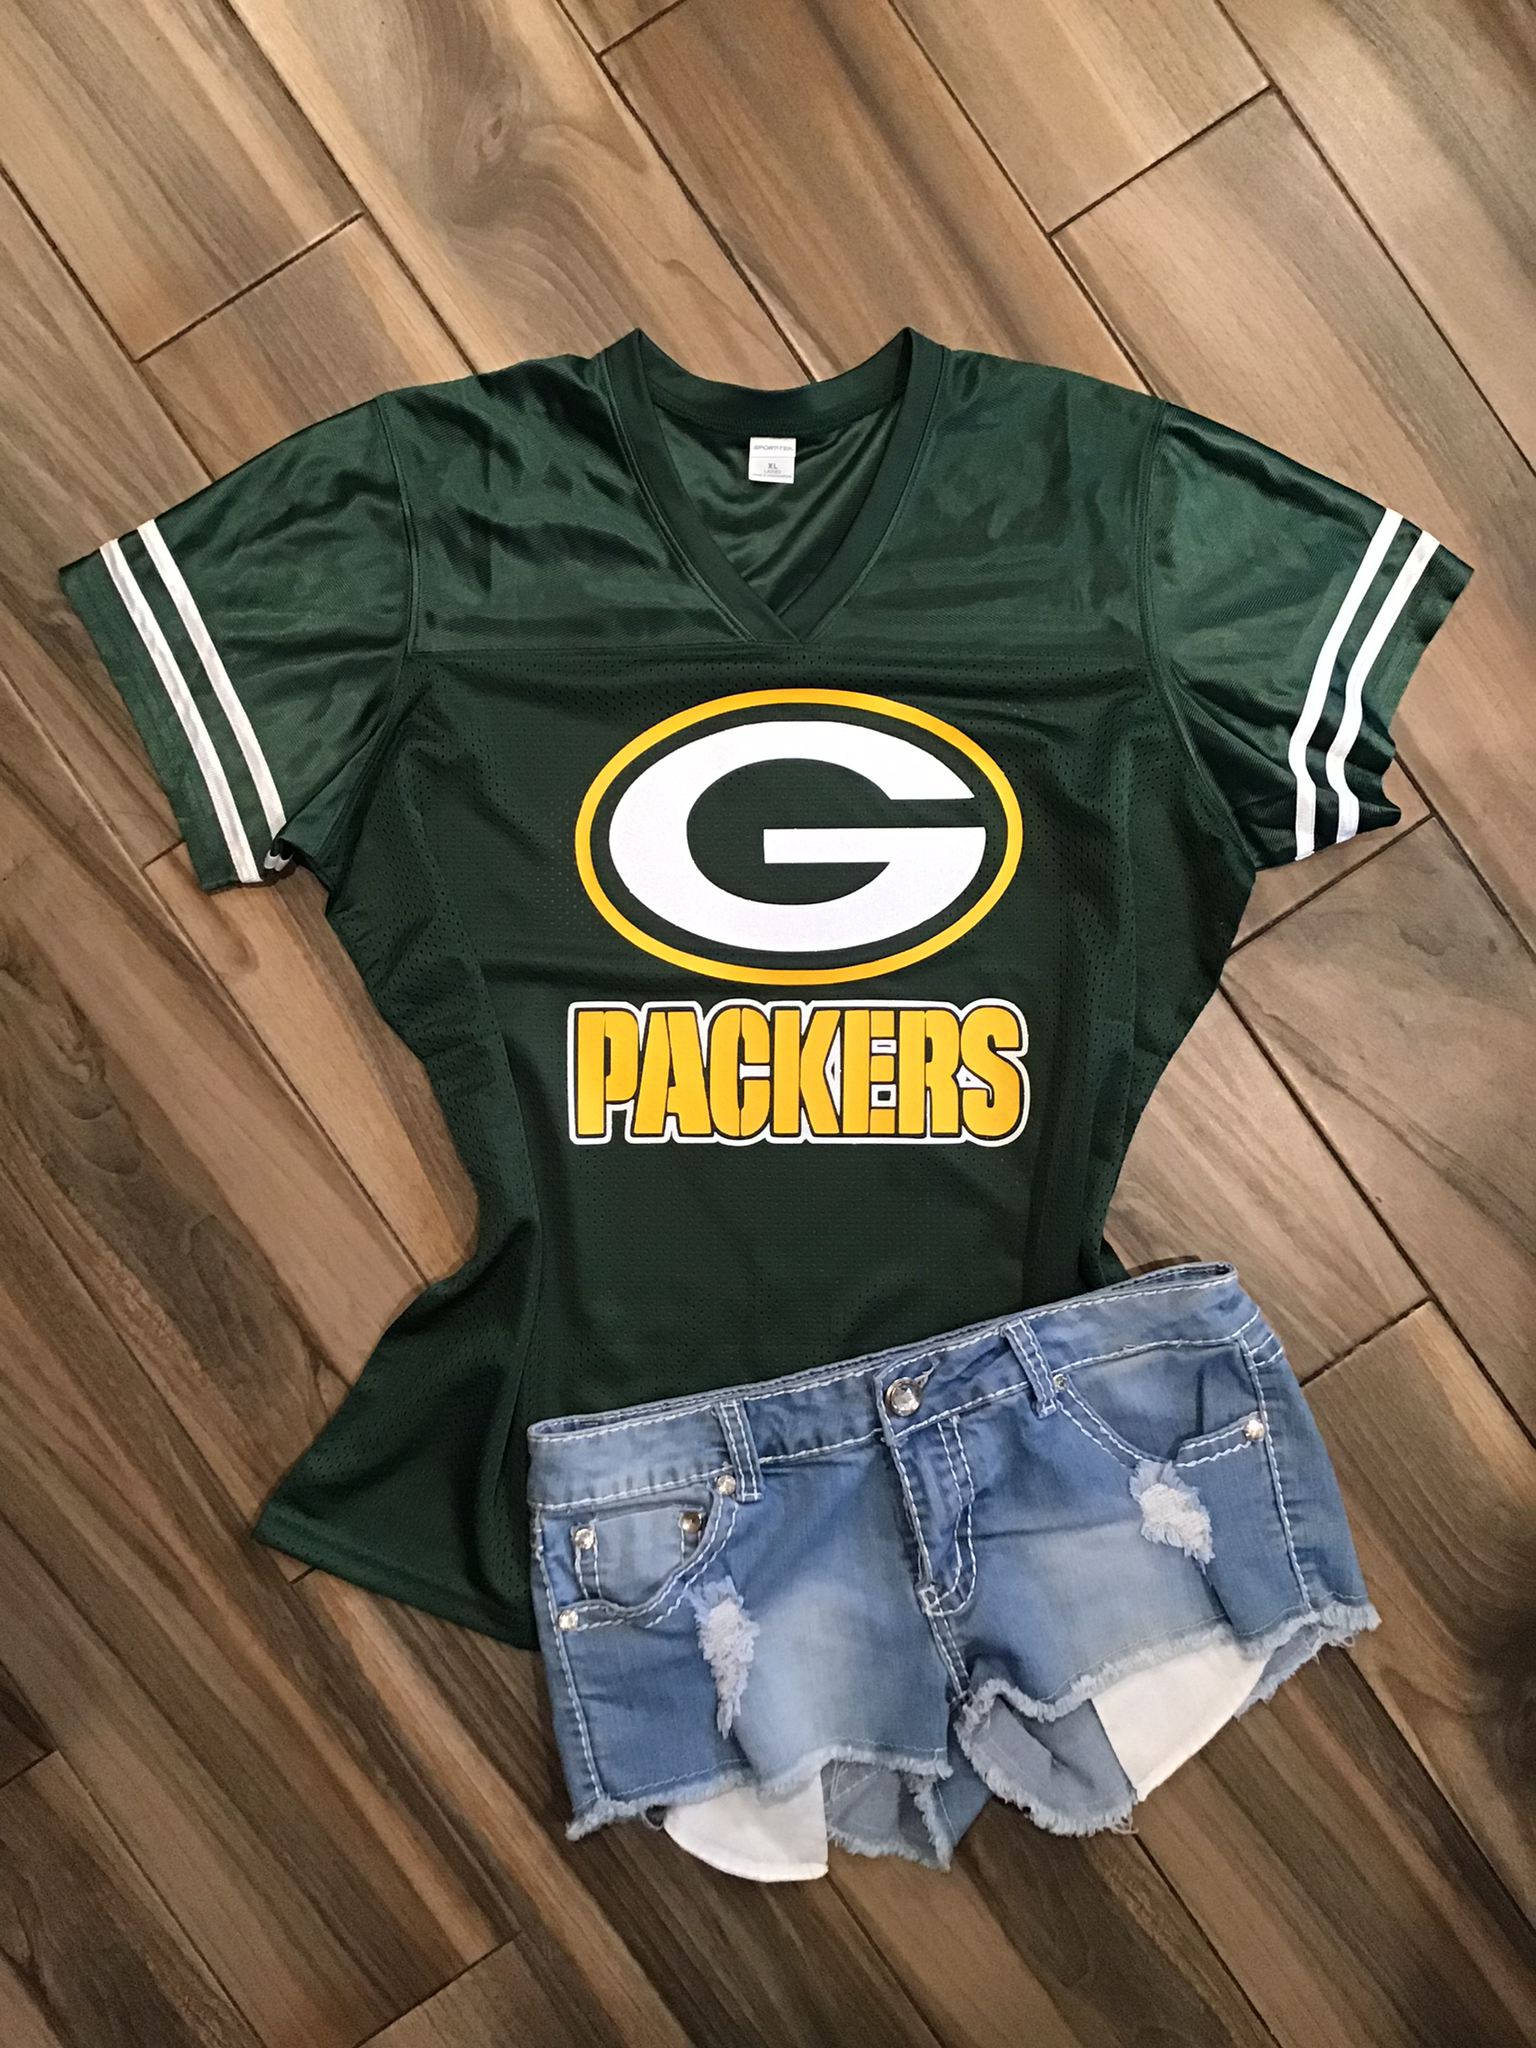 Green Bay Packers NFL Football Jacket G-III Apparel Men's Size Medium